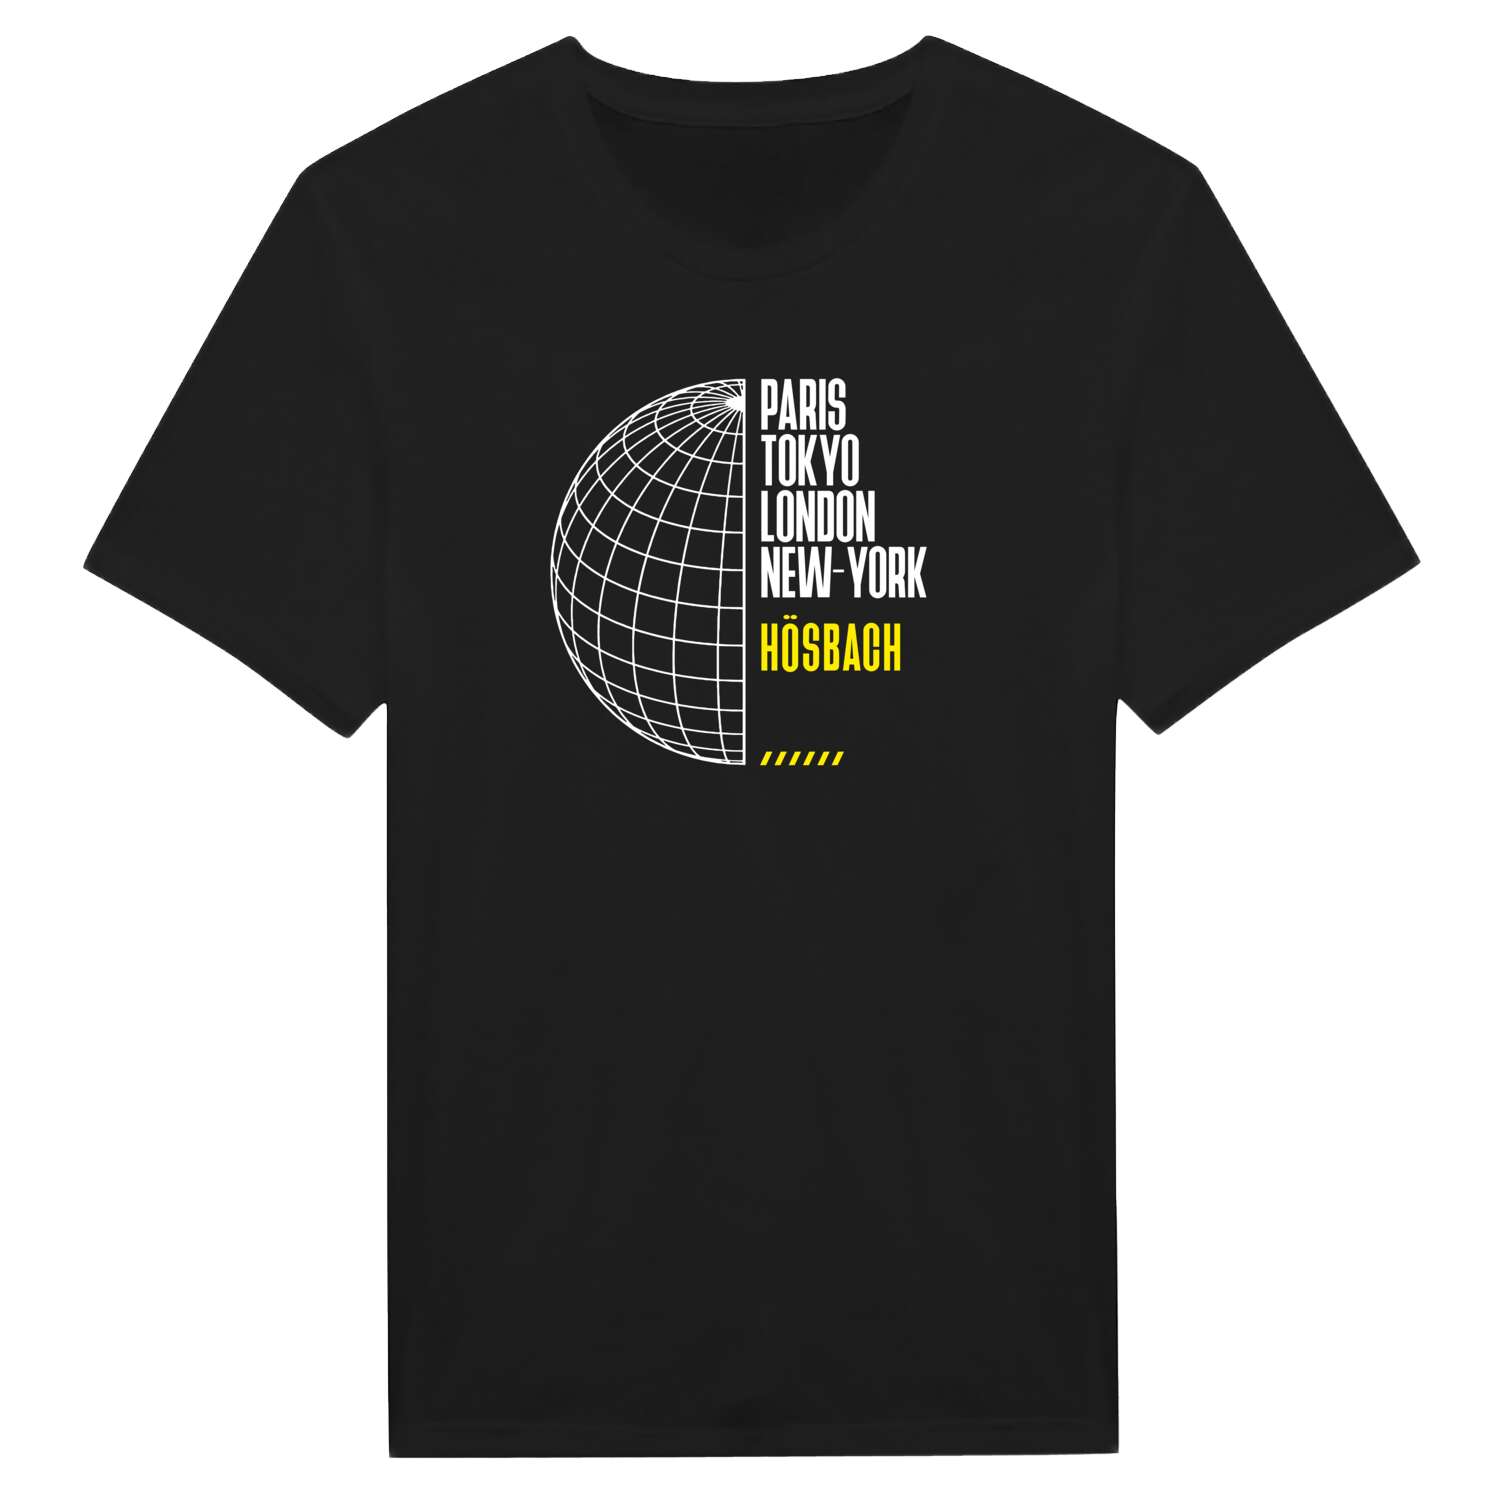 Hösbach T-Shirt »Paris Tokyo London«